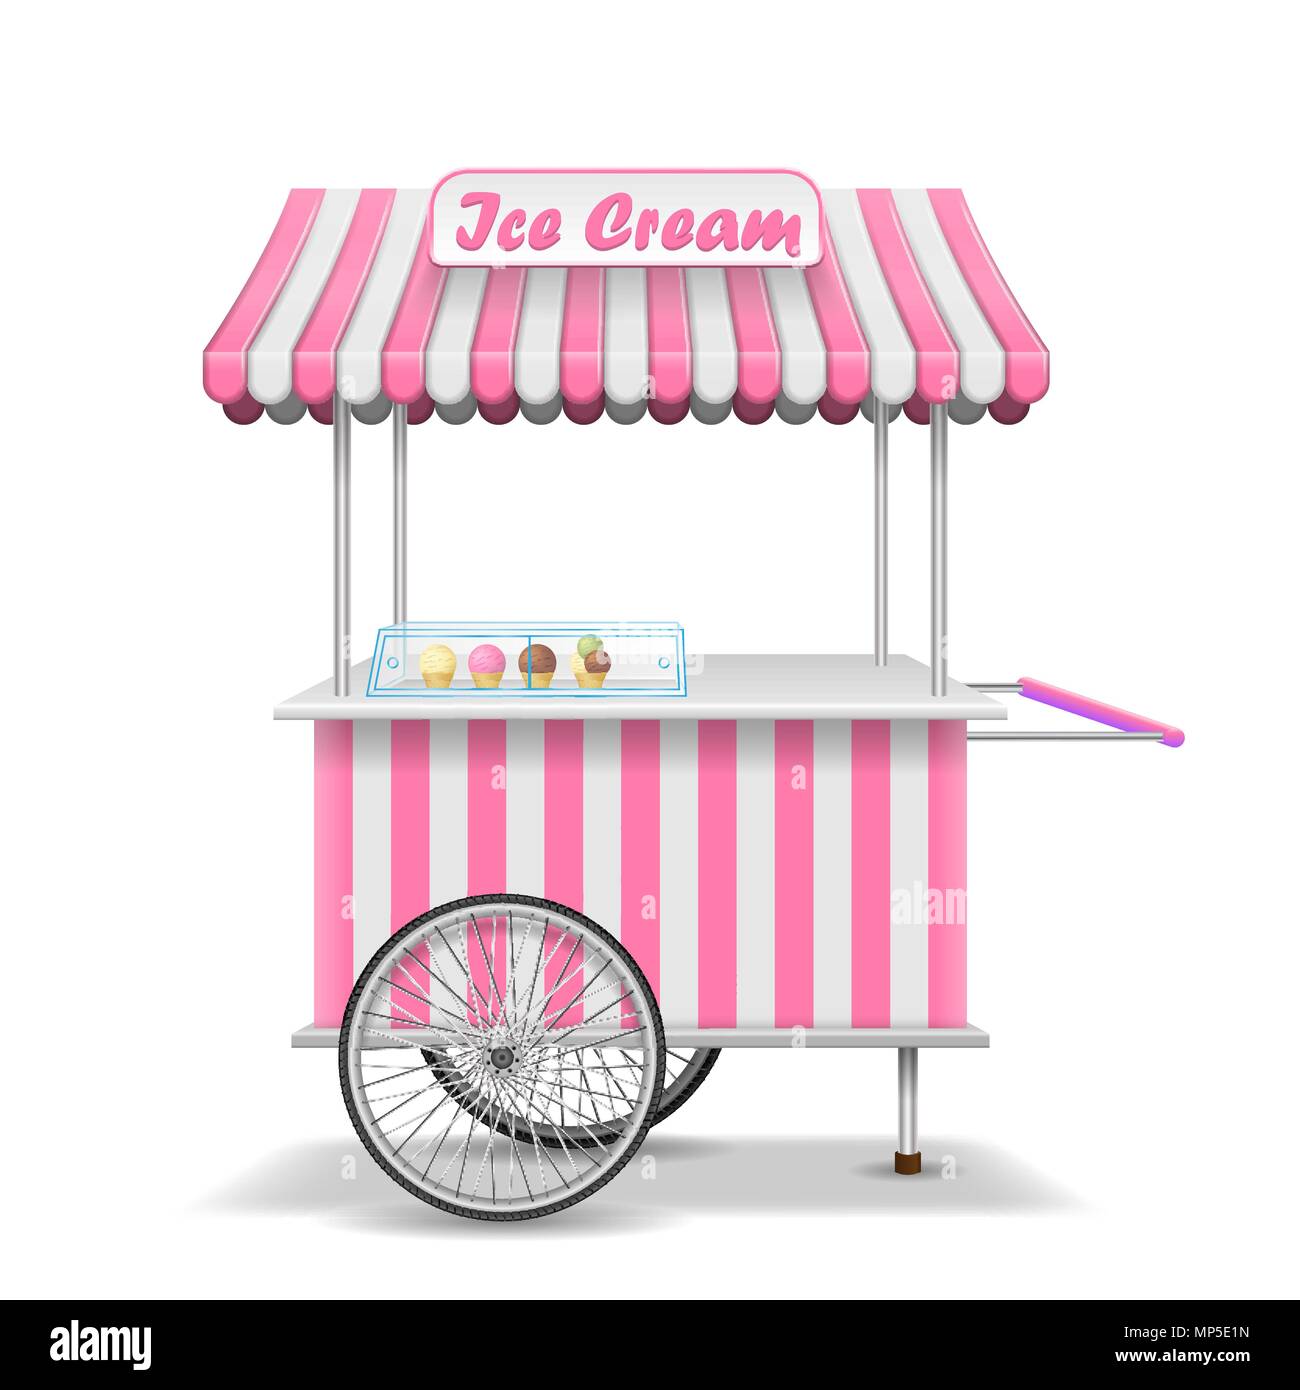 Realistische Street Food Warenkorb mit Rädern. Mobile rosa Eis markt Vorlage abgewürgt. Eis Kiosk Store mockup. Vector Illustration Stock Vektor